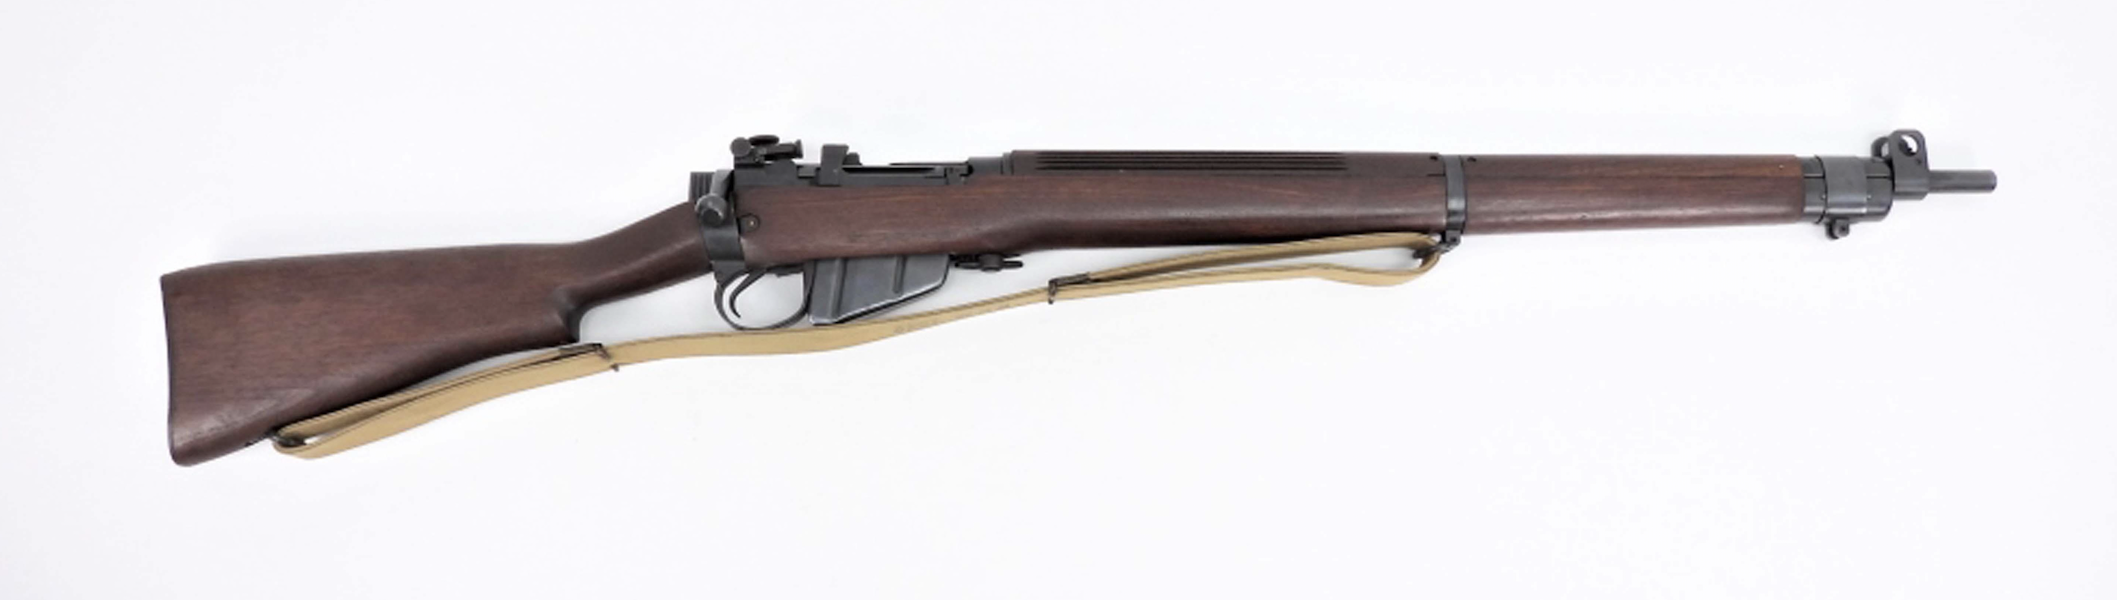 Circa-1946 Canadian-made .22 caliber Long Branch No. 7 MKI bolt-action rifle, estimated at $300-$500